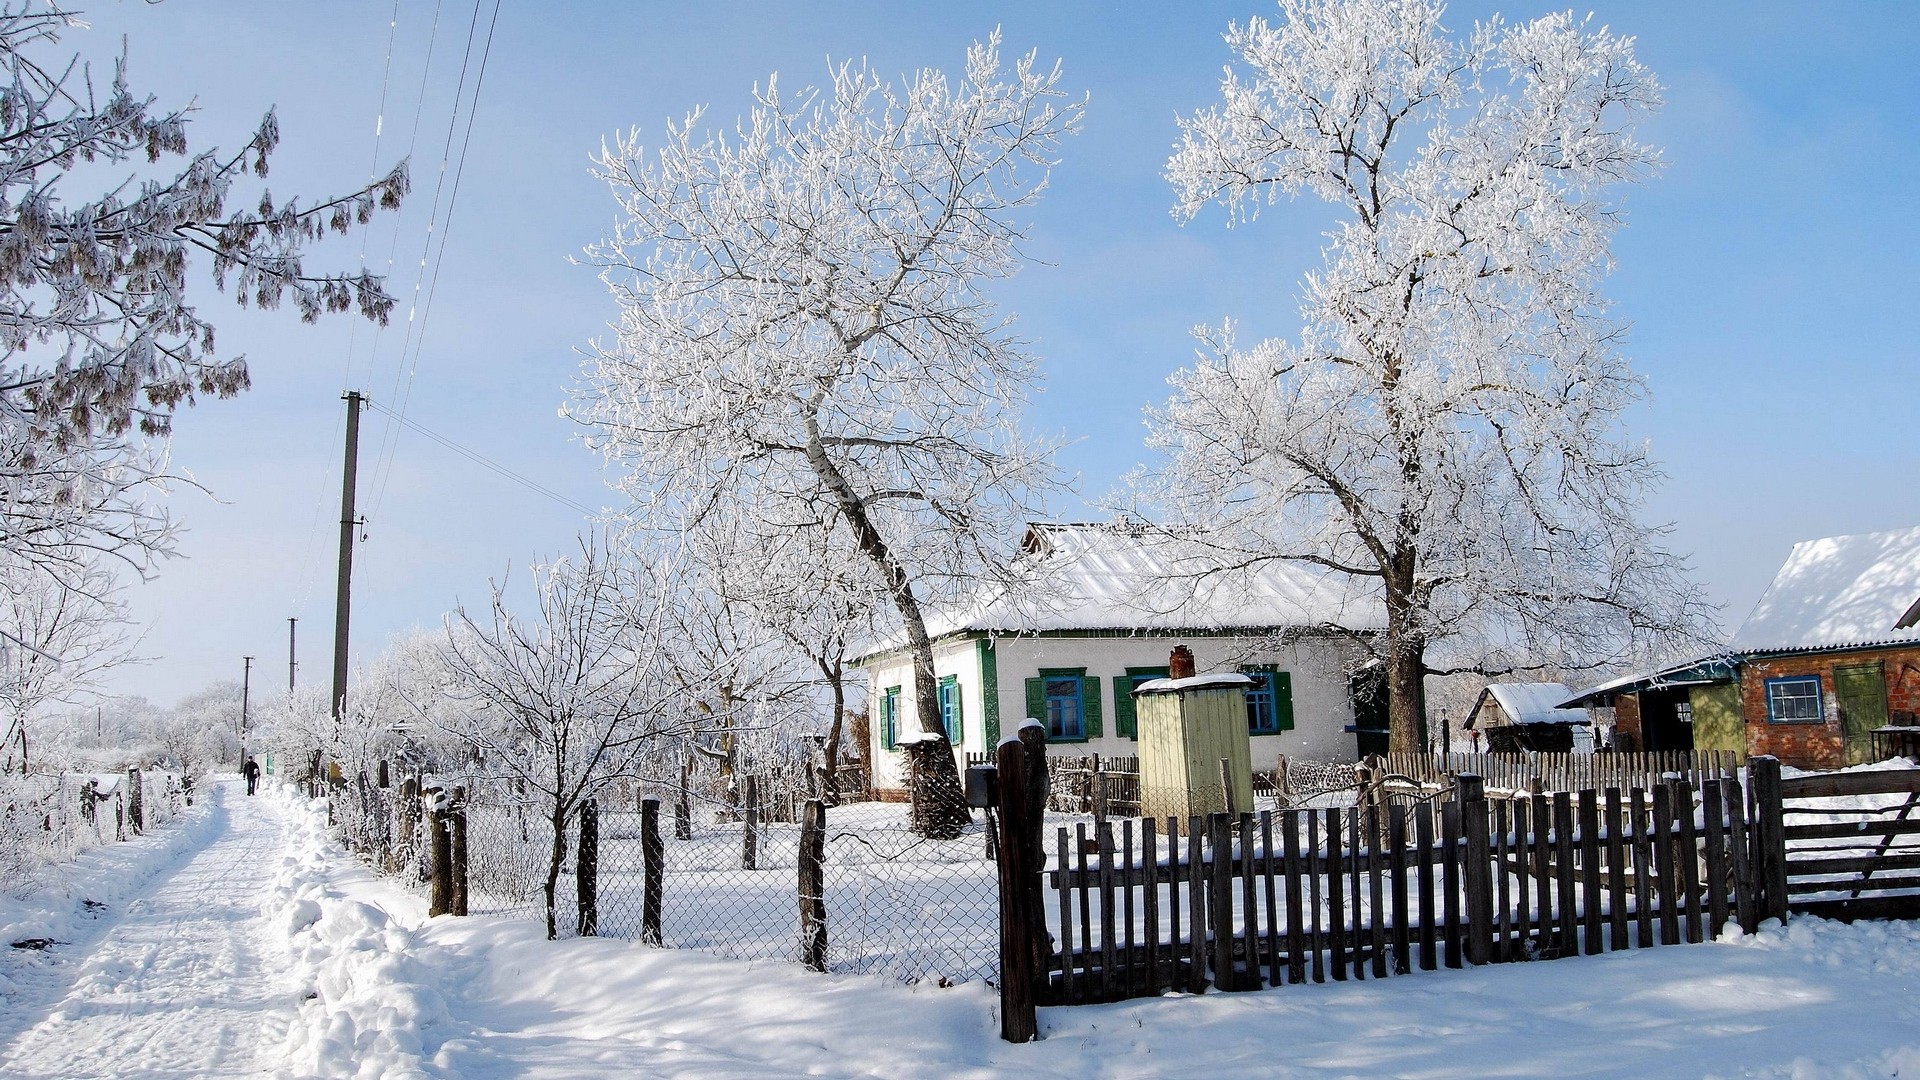 1920x1080 wallpapers: 冬、雪、家、フェンス、村 (image)